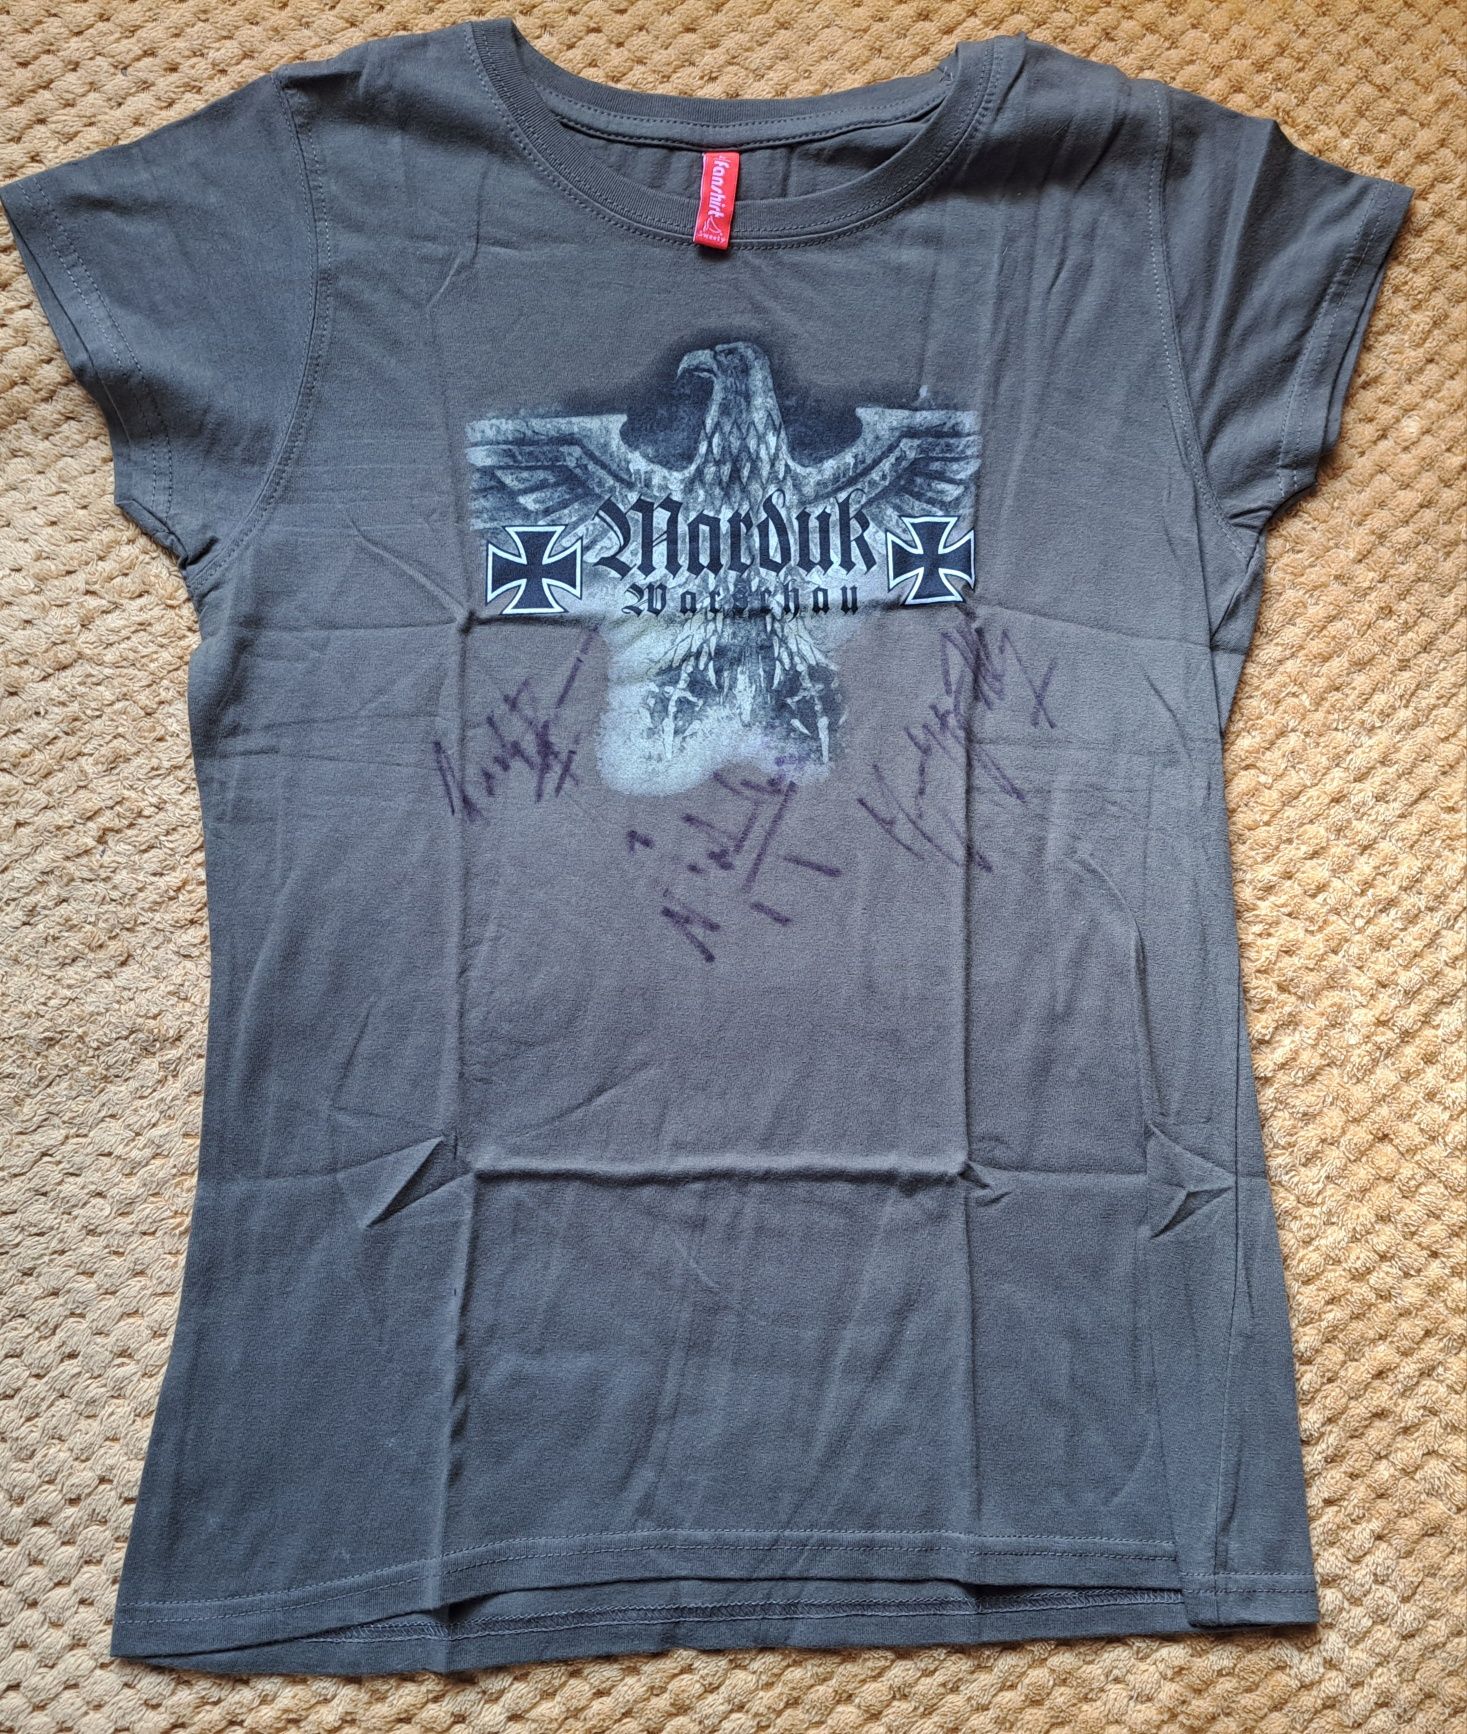 MARDUK koszulka T-shirt girly z autografami muzykow Black Metal